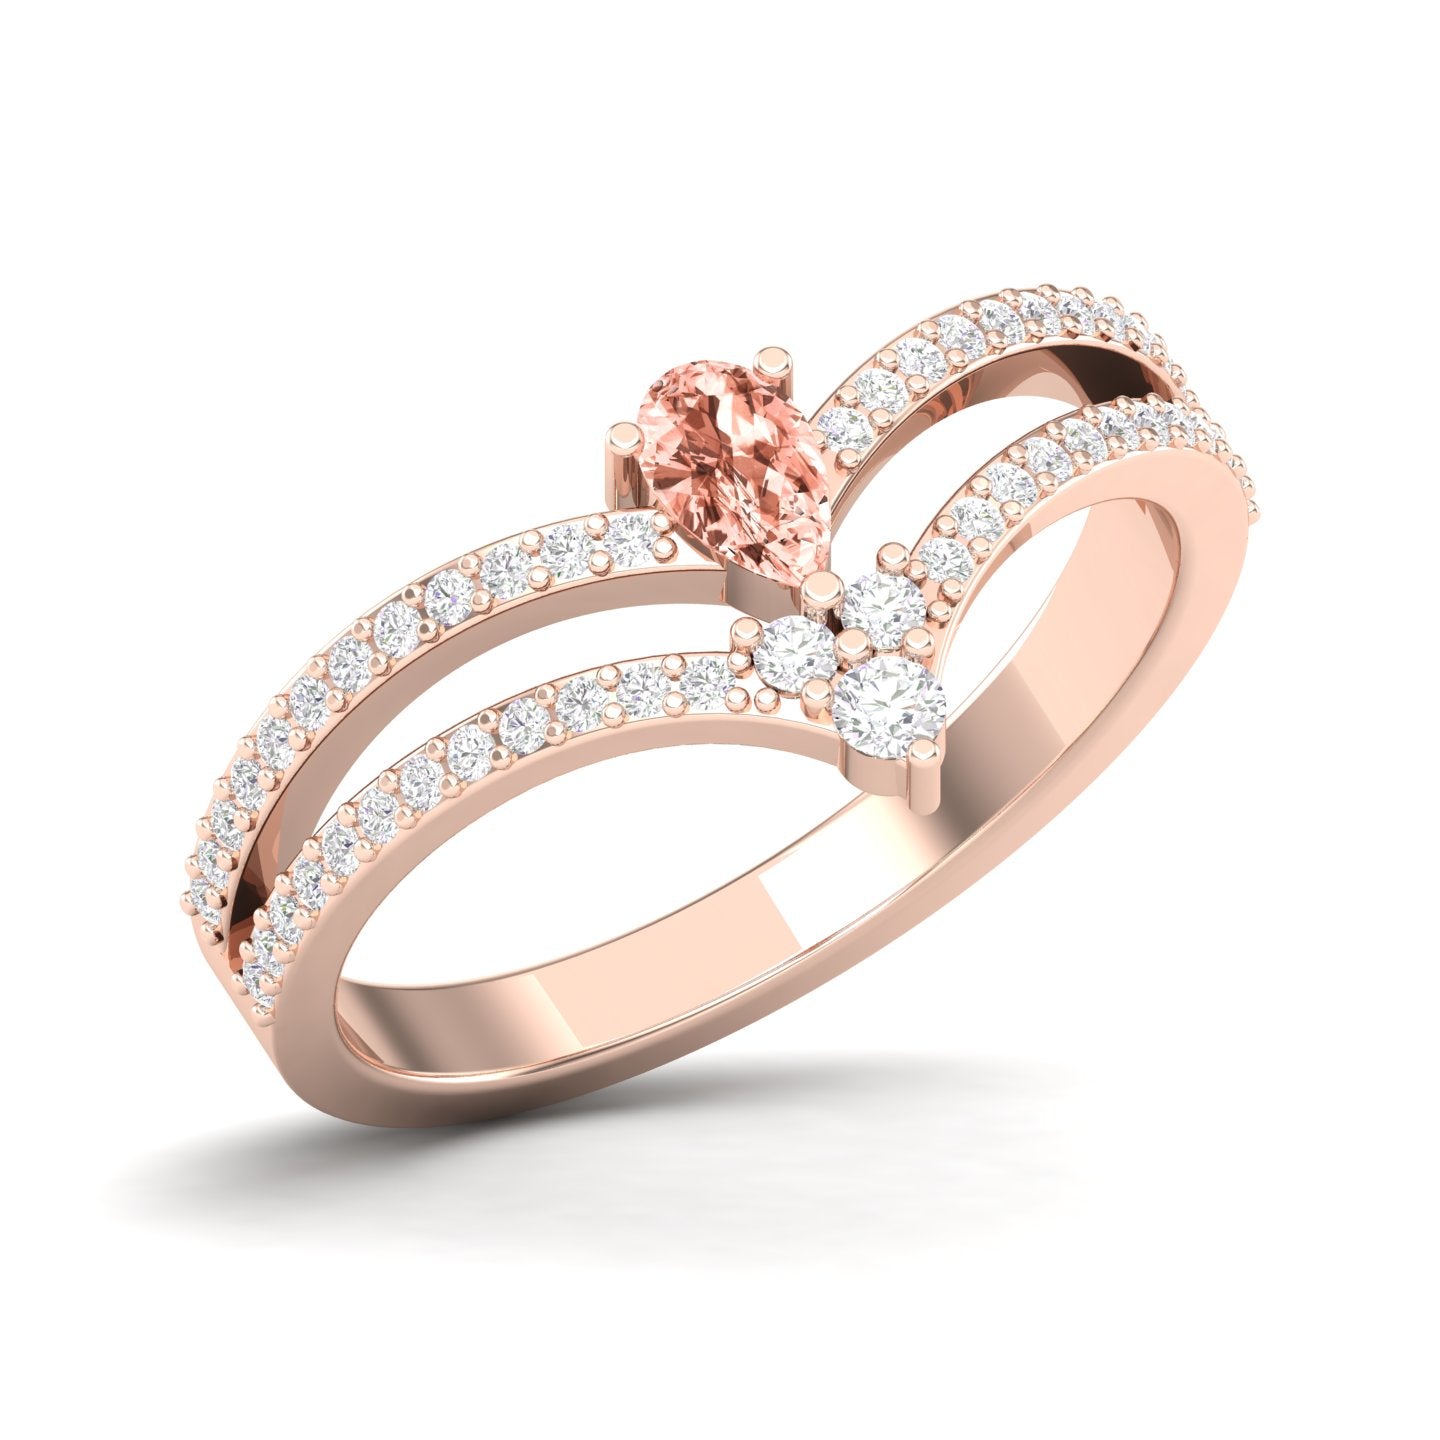 Maurya Diadem Morganite Chevron Engagement Ring with Accent Diamonds